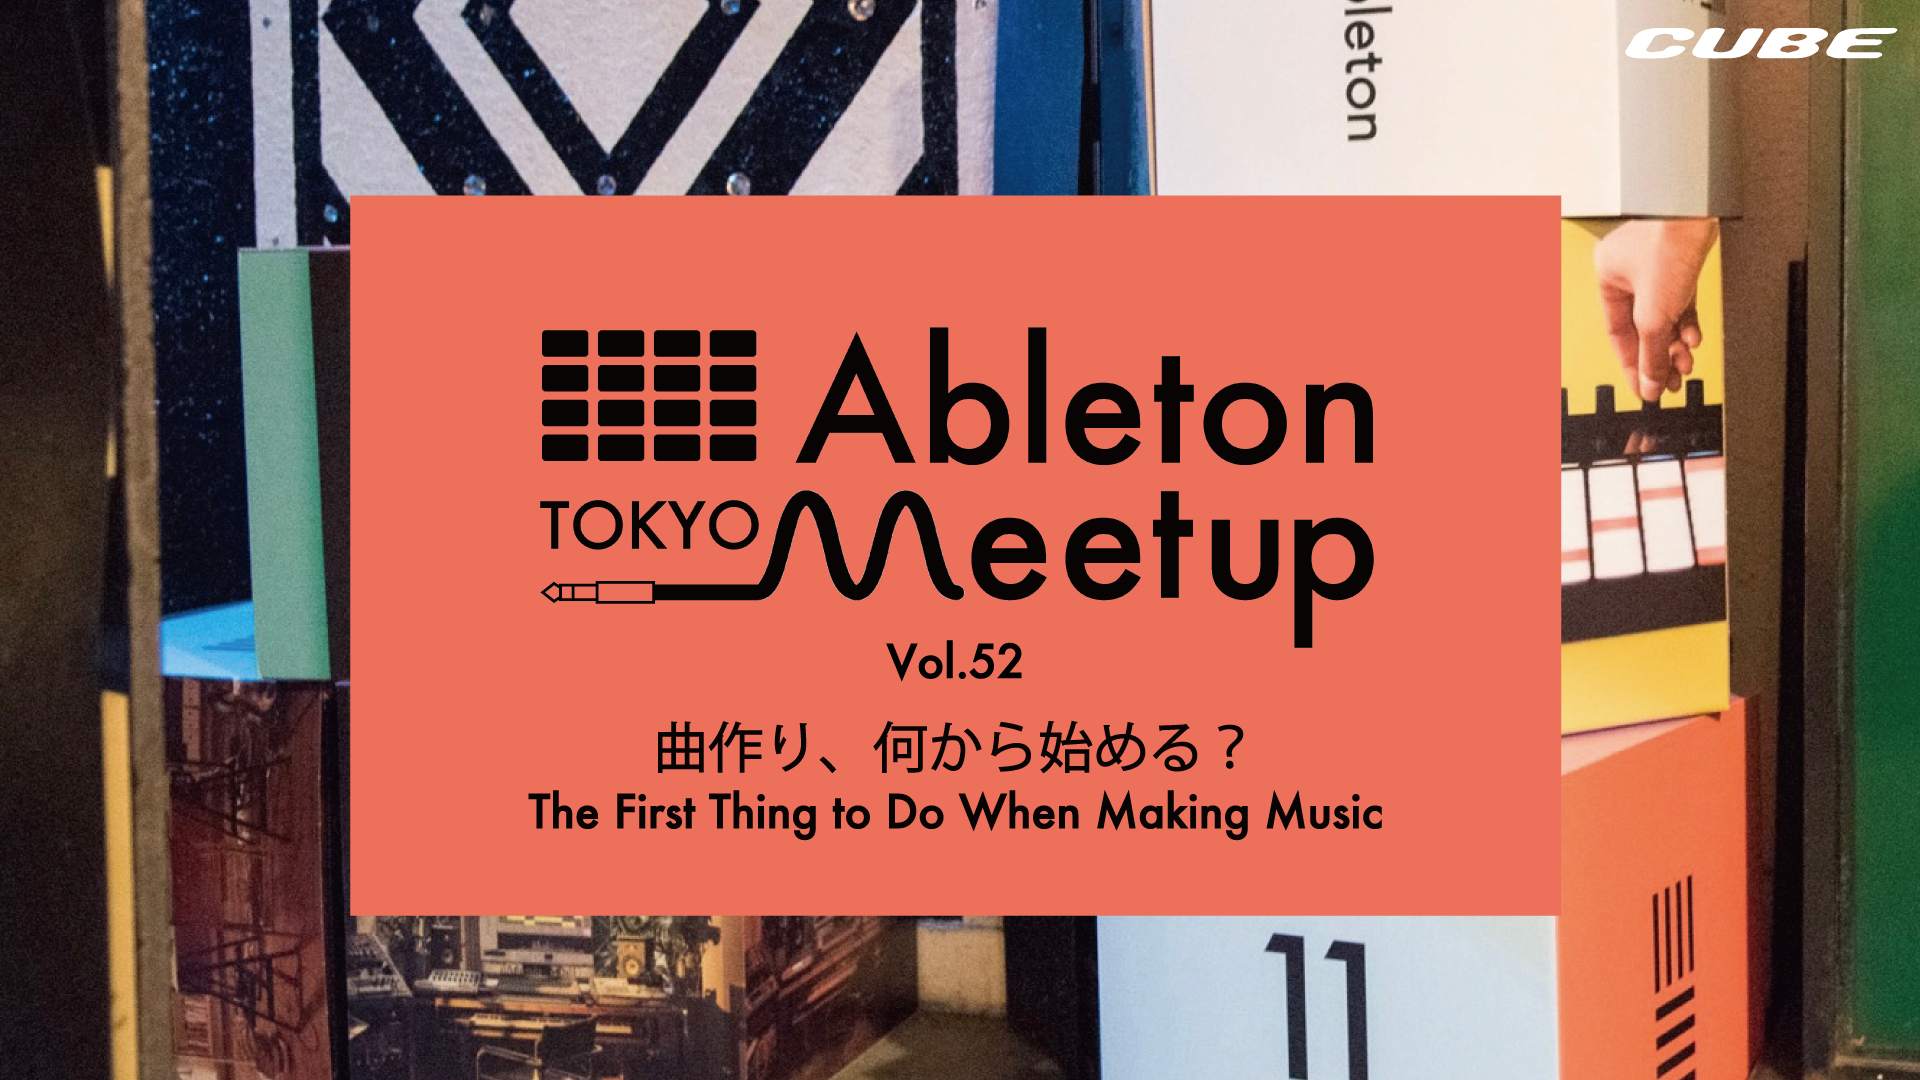 Ableton Meetup Tokyo Vol.52 - フライヤー表